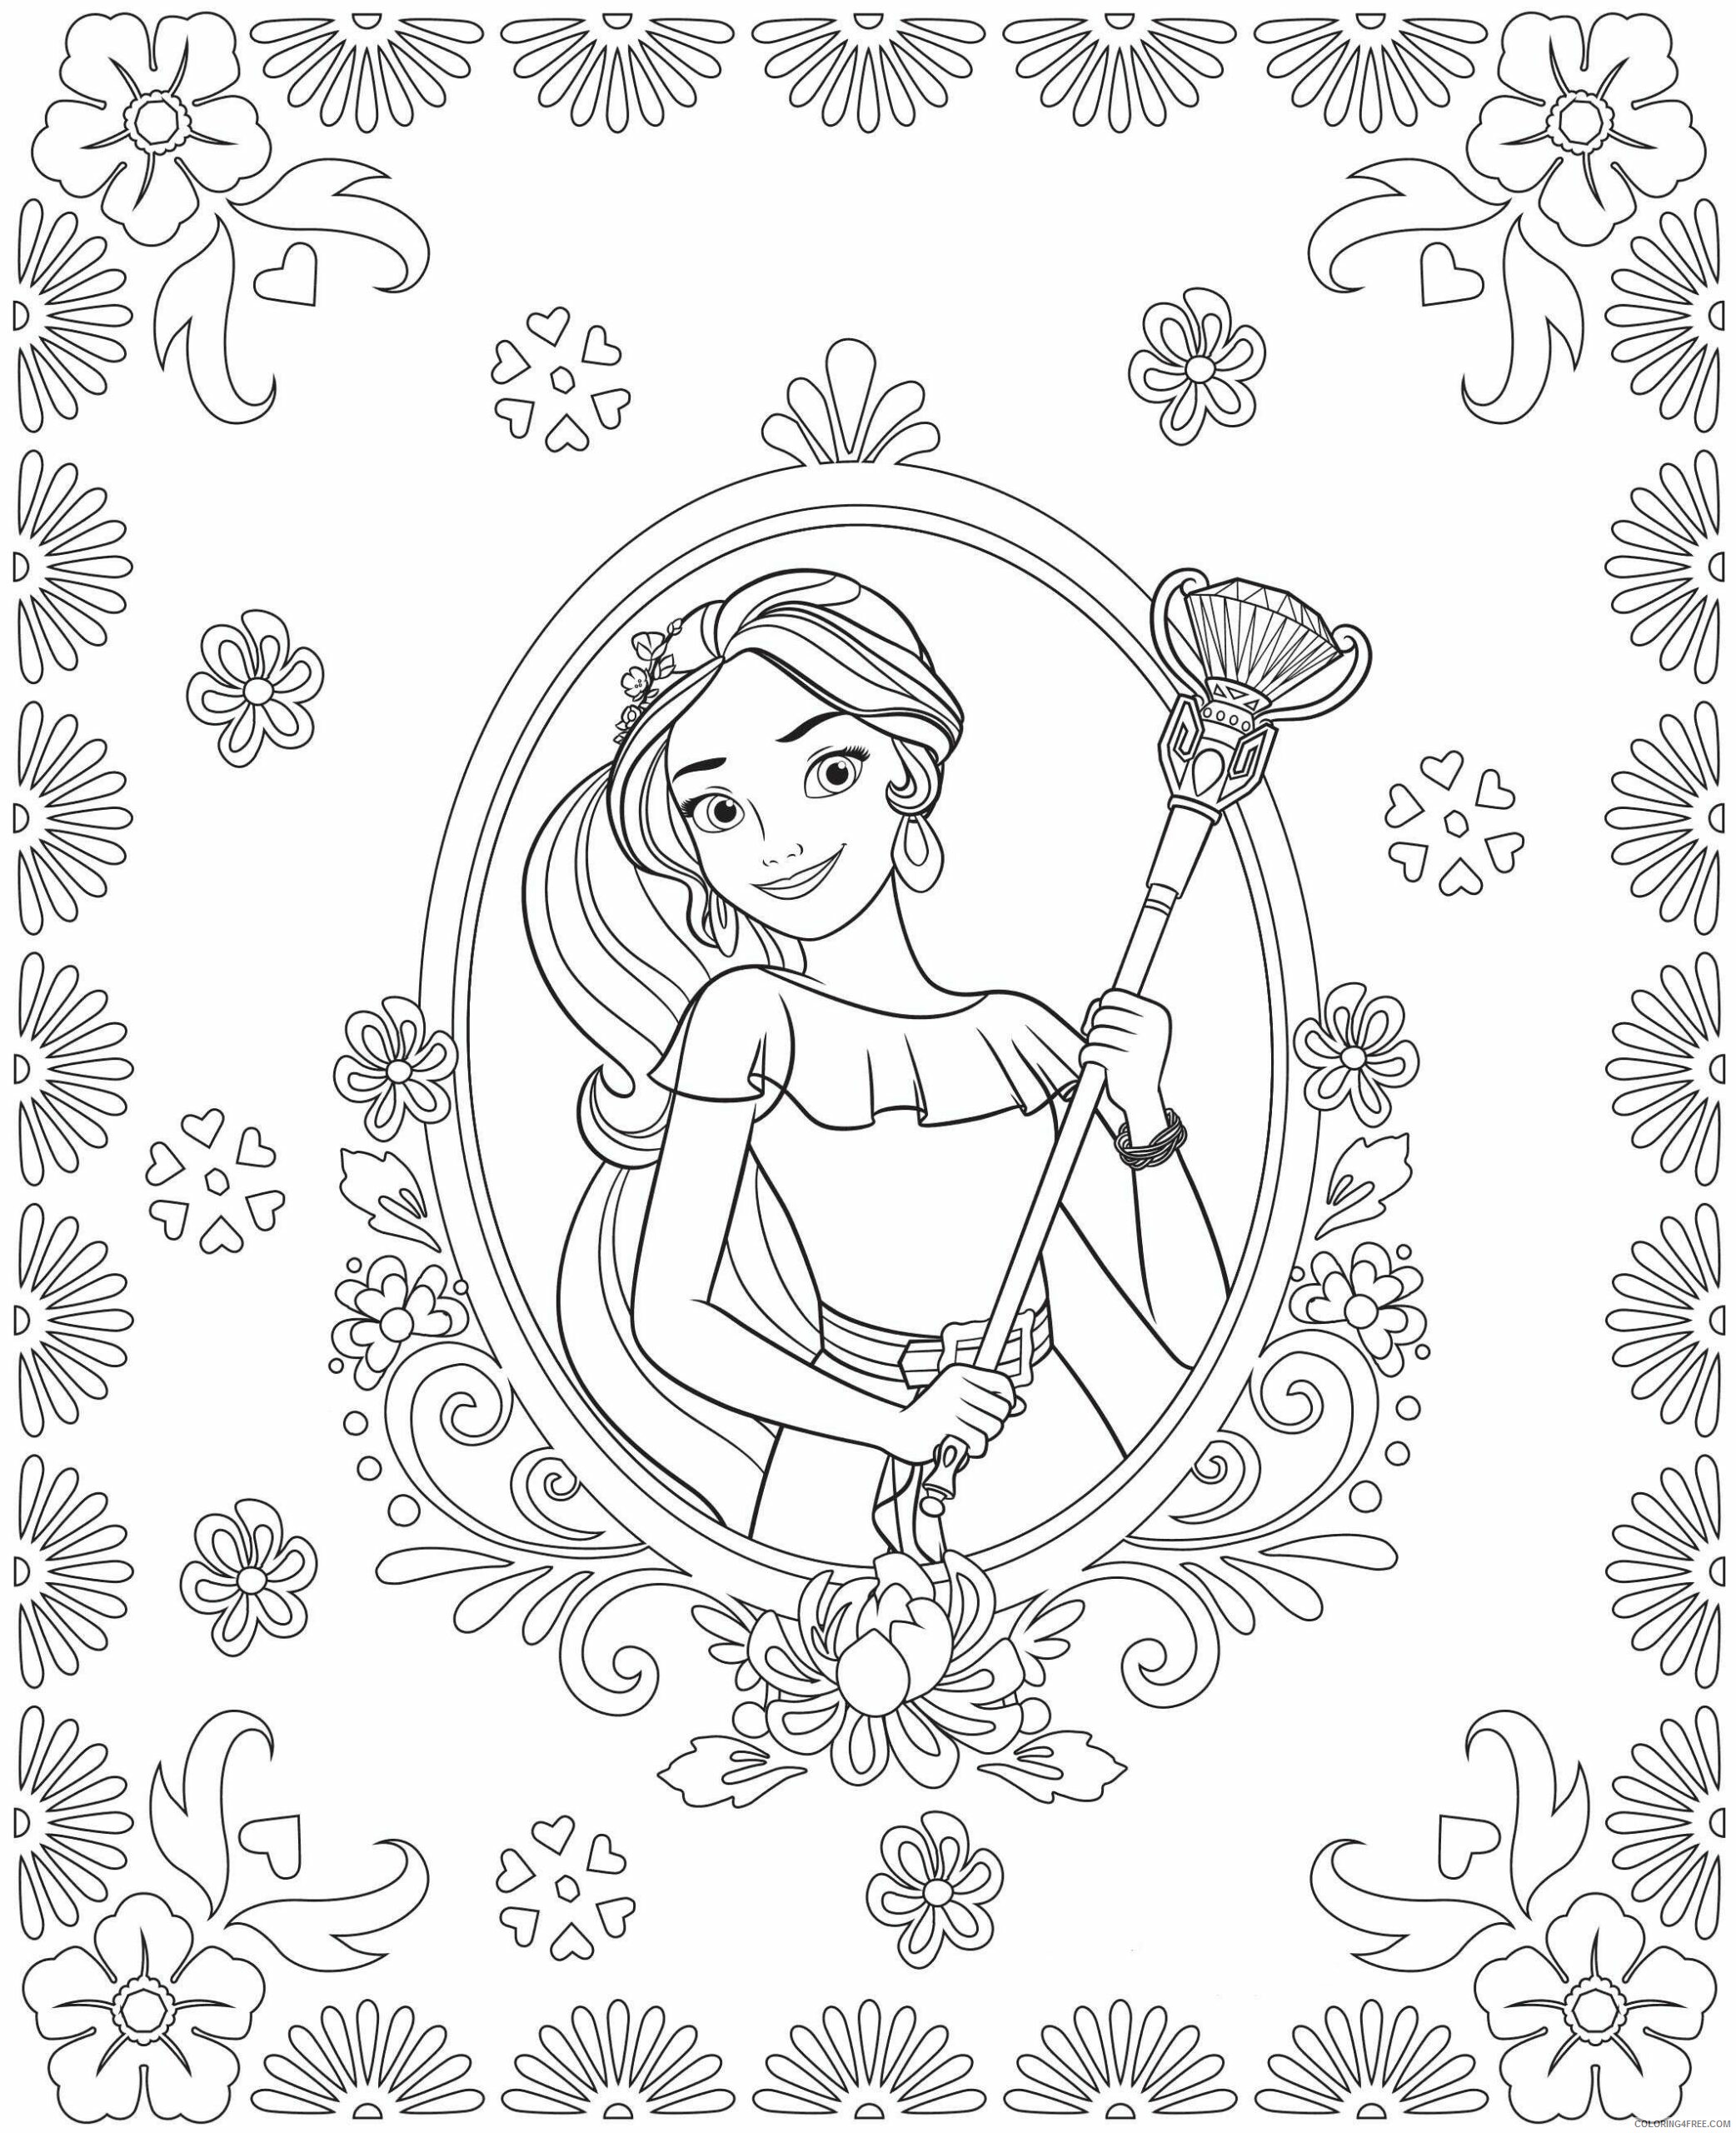 Princess Coloring Pages for Girls Princess Elena Printable 2021 1126 Coloring4free